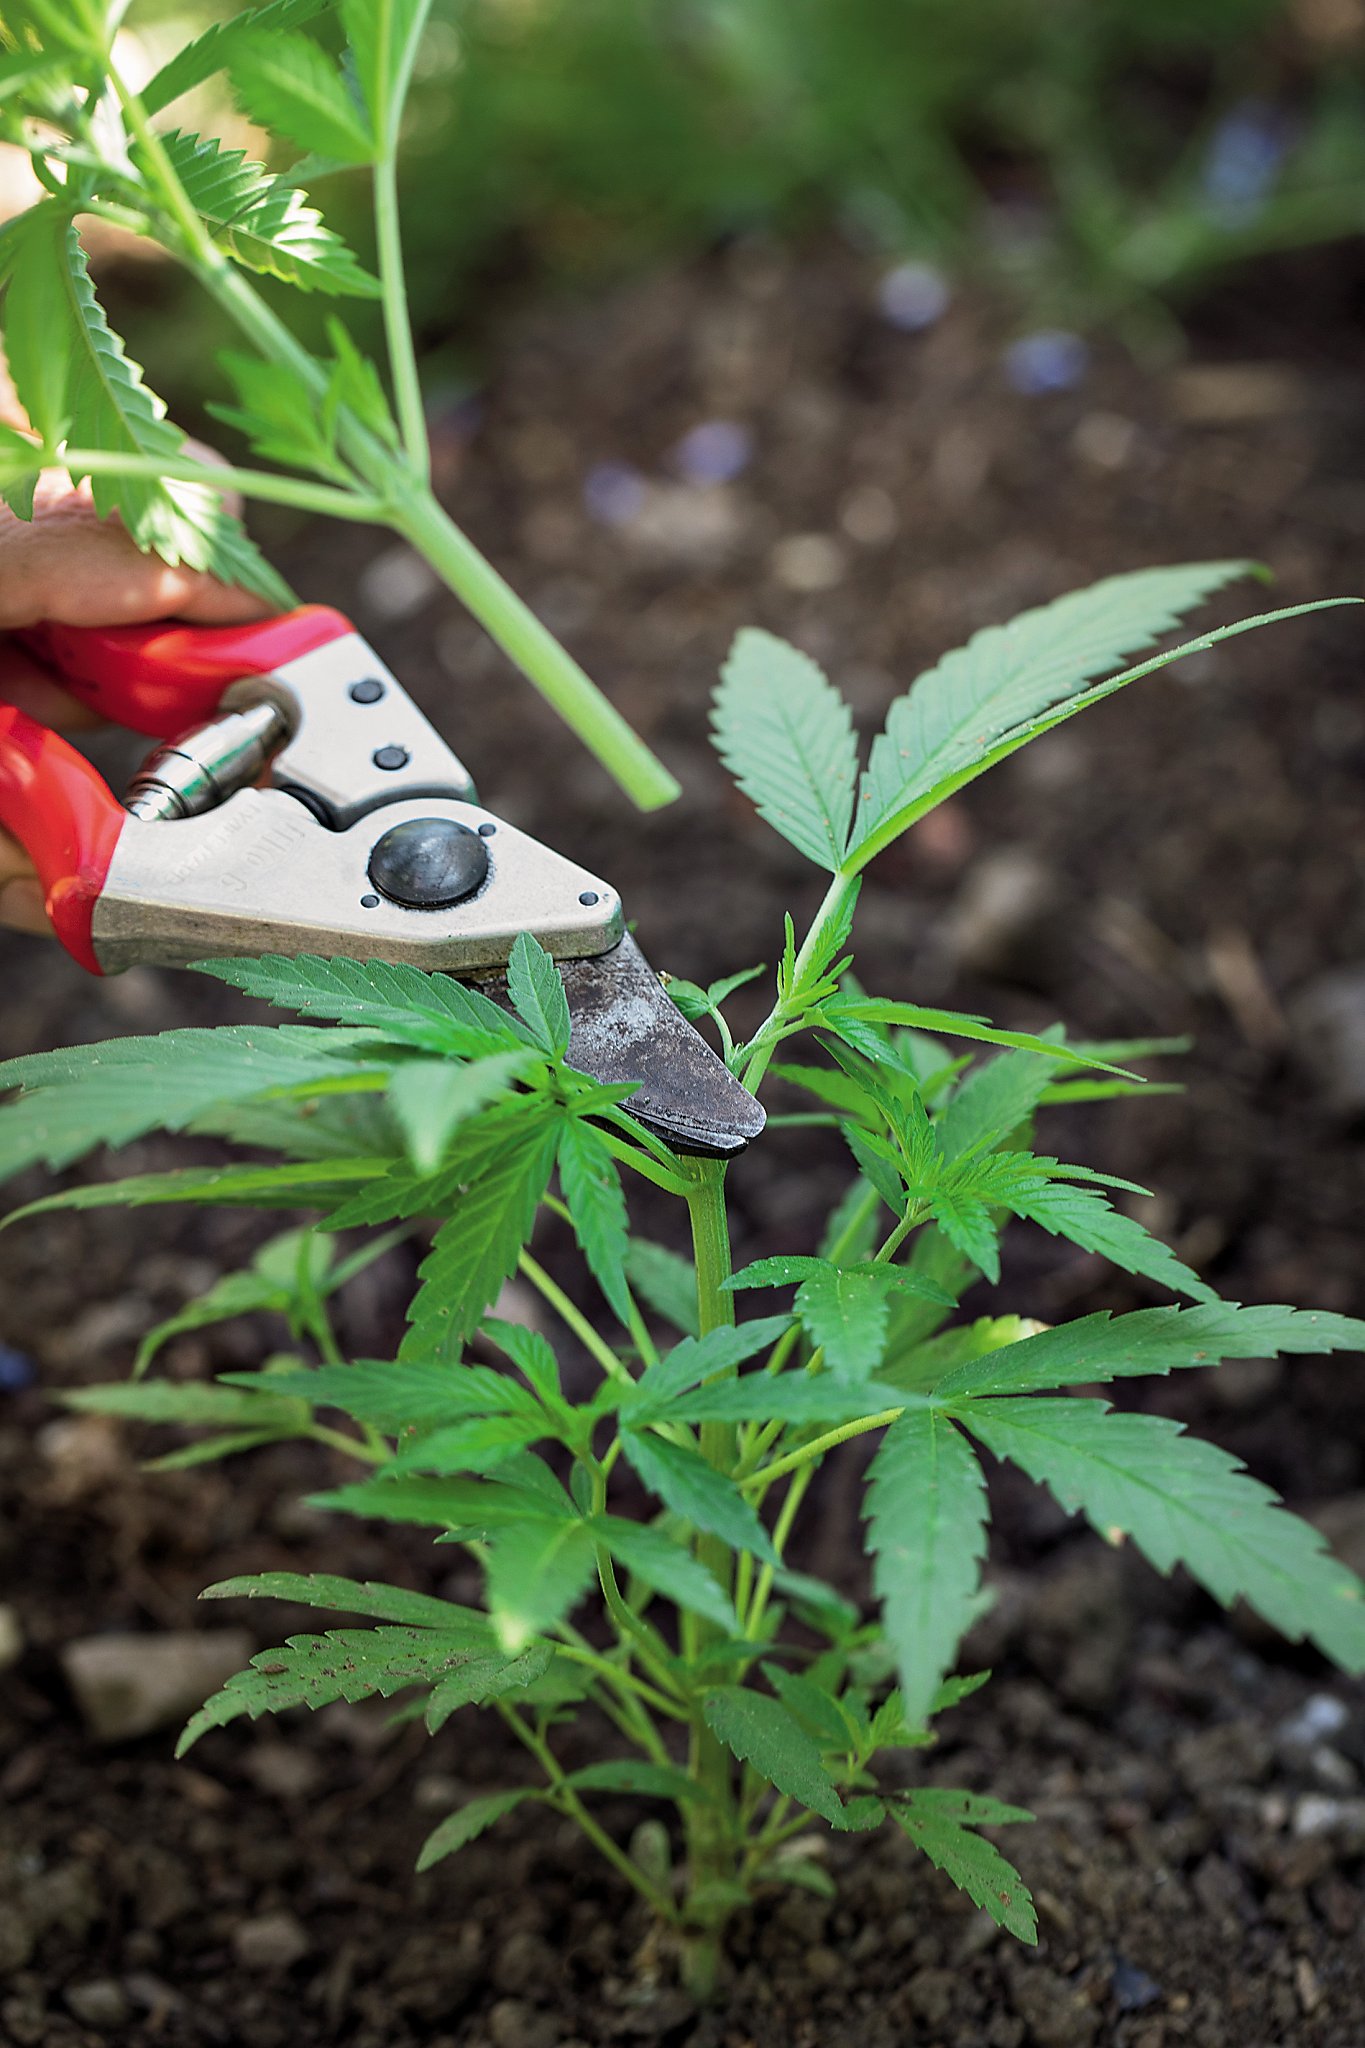 Growing cannabis outdoors: pots or open soil? - Sensi Seeds